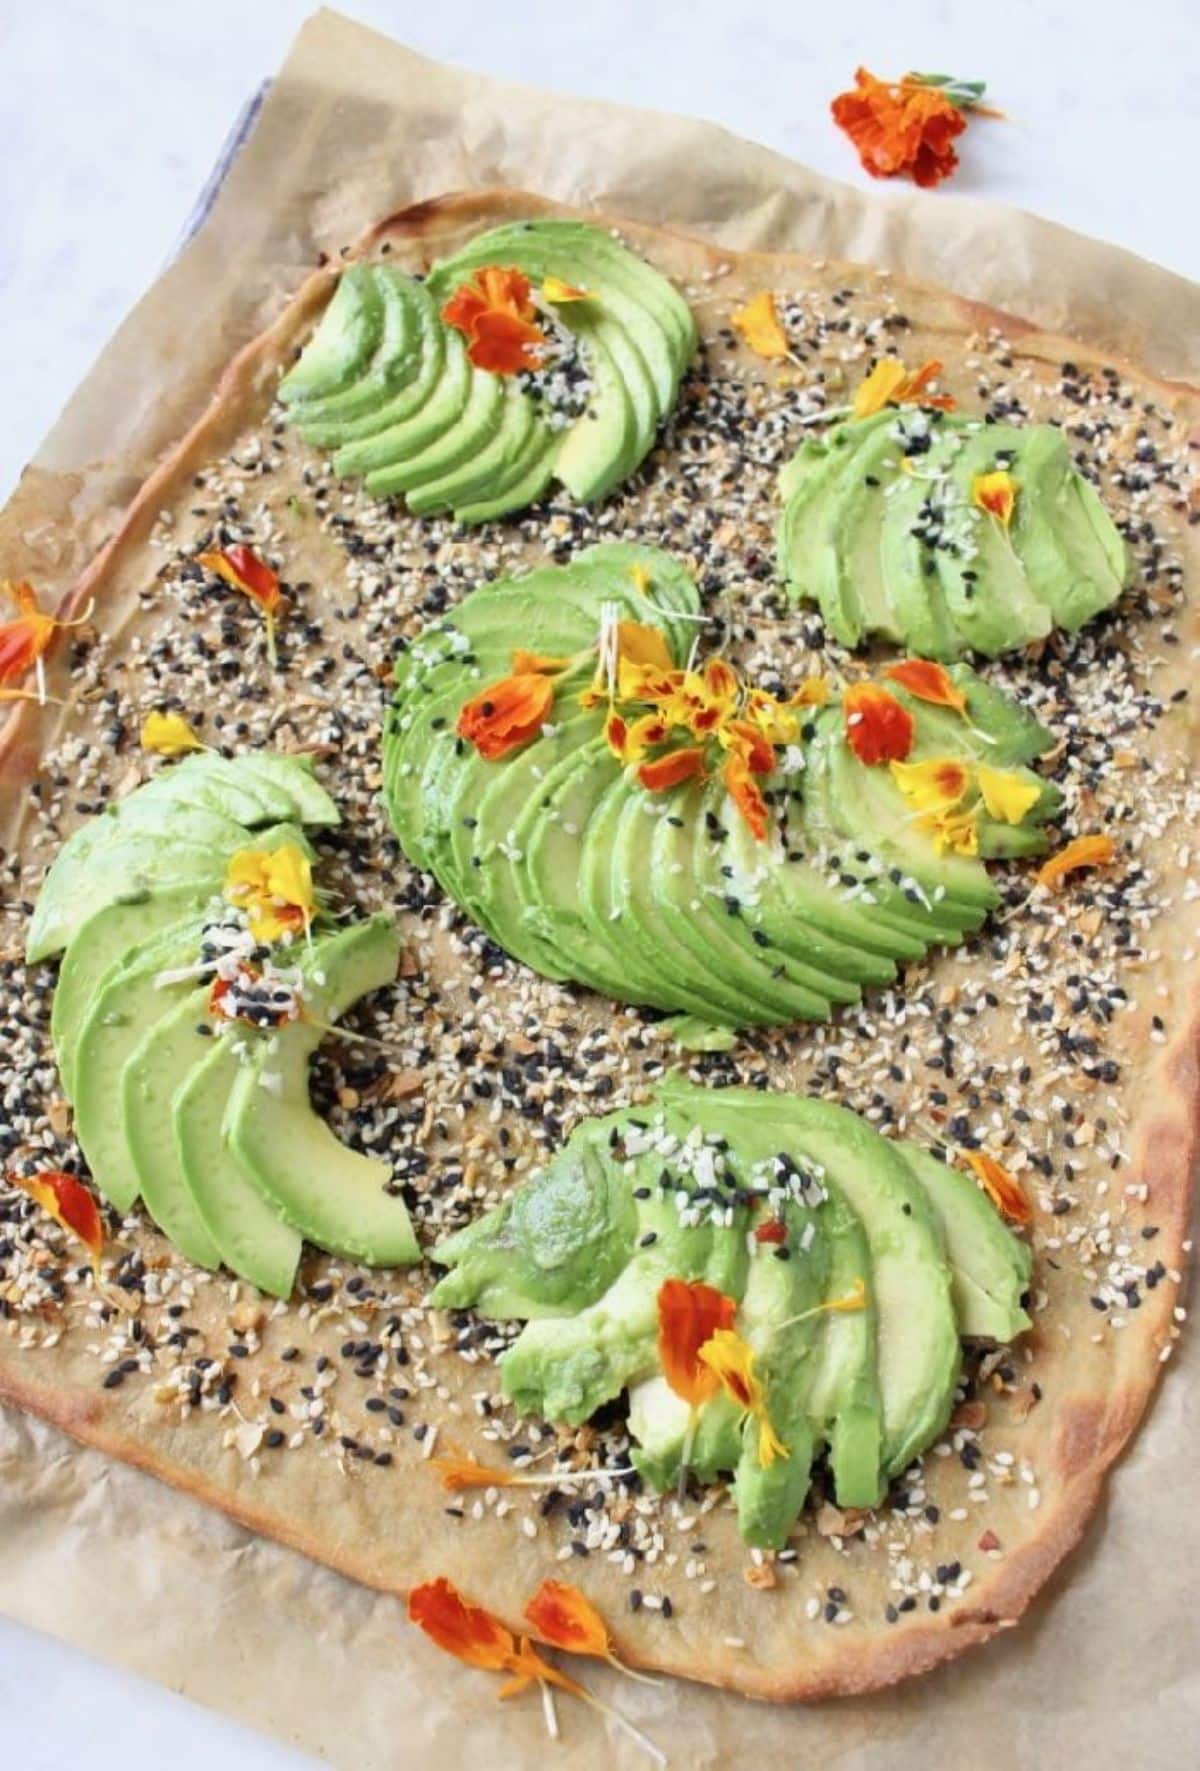 Scrispy quinoa flatbread with sliced avocado on a baking tray.